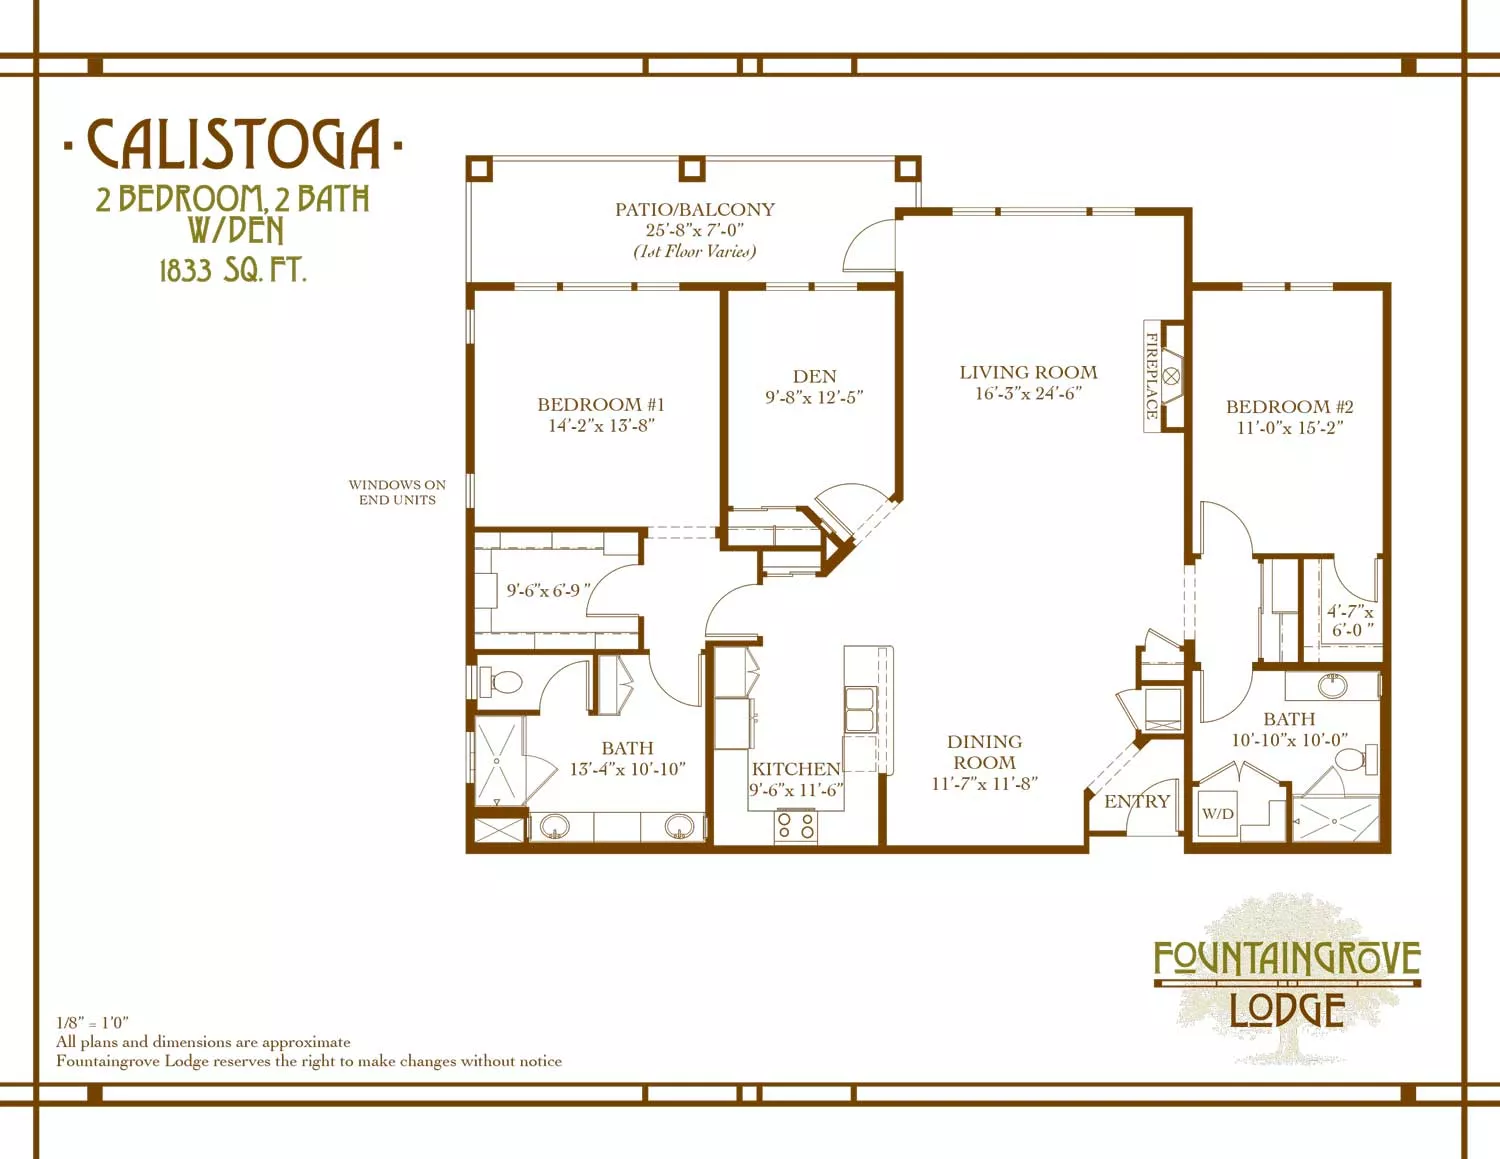 Calistoga two bedroom and two bath floor plan